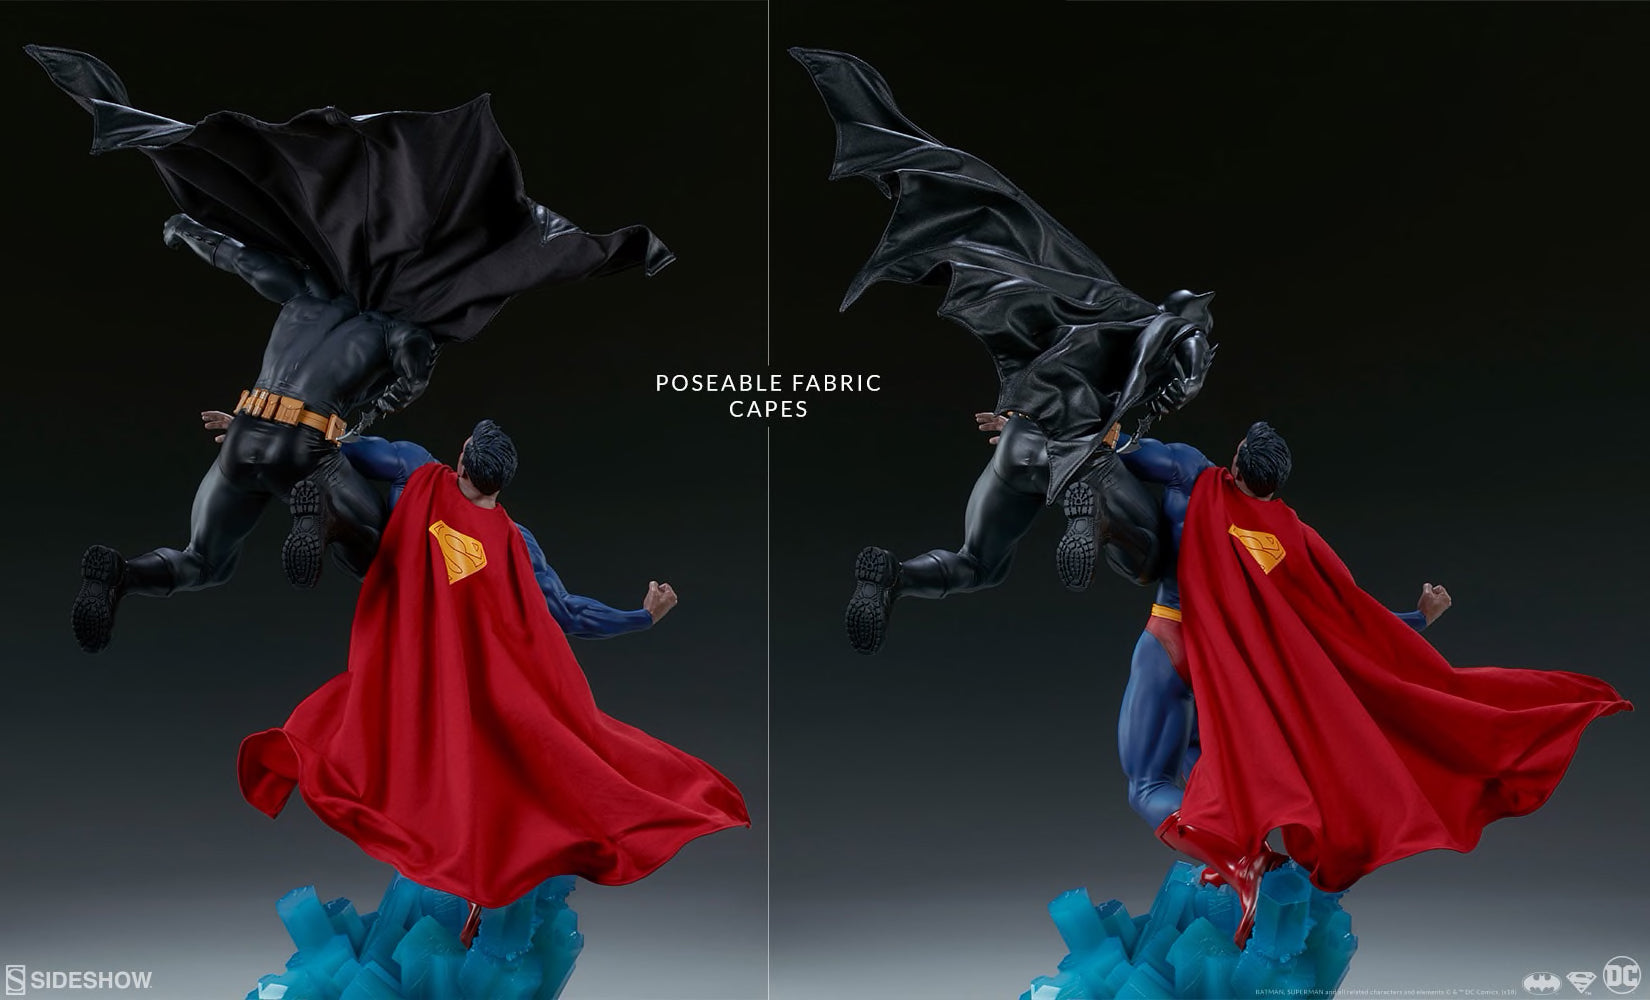 Sideshow Collectibles - DC Comics - Batman vs Superman Diorama - Marvelous Toys